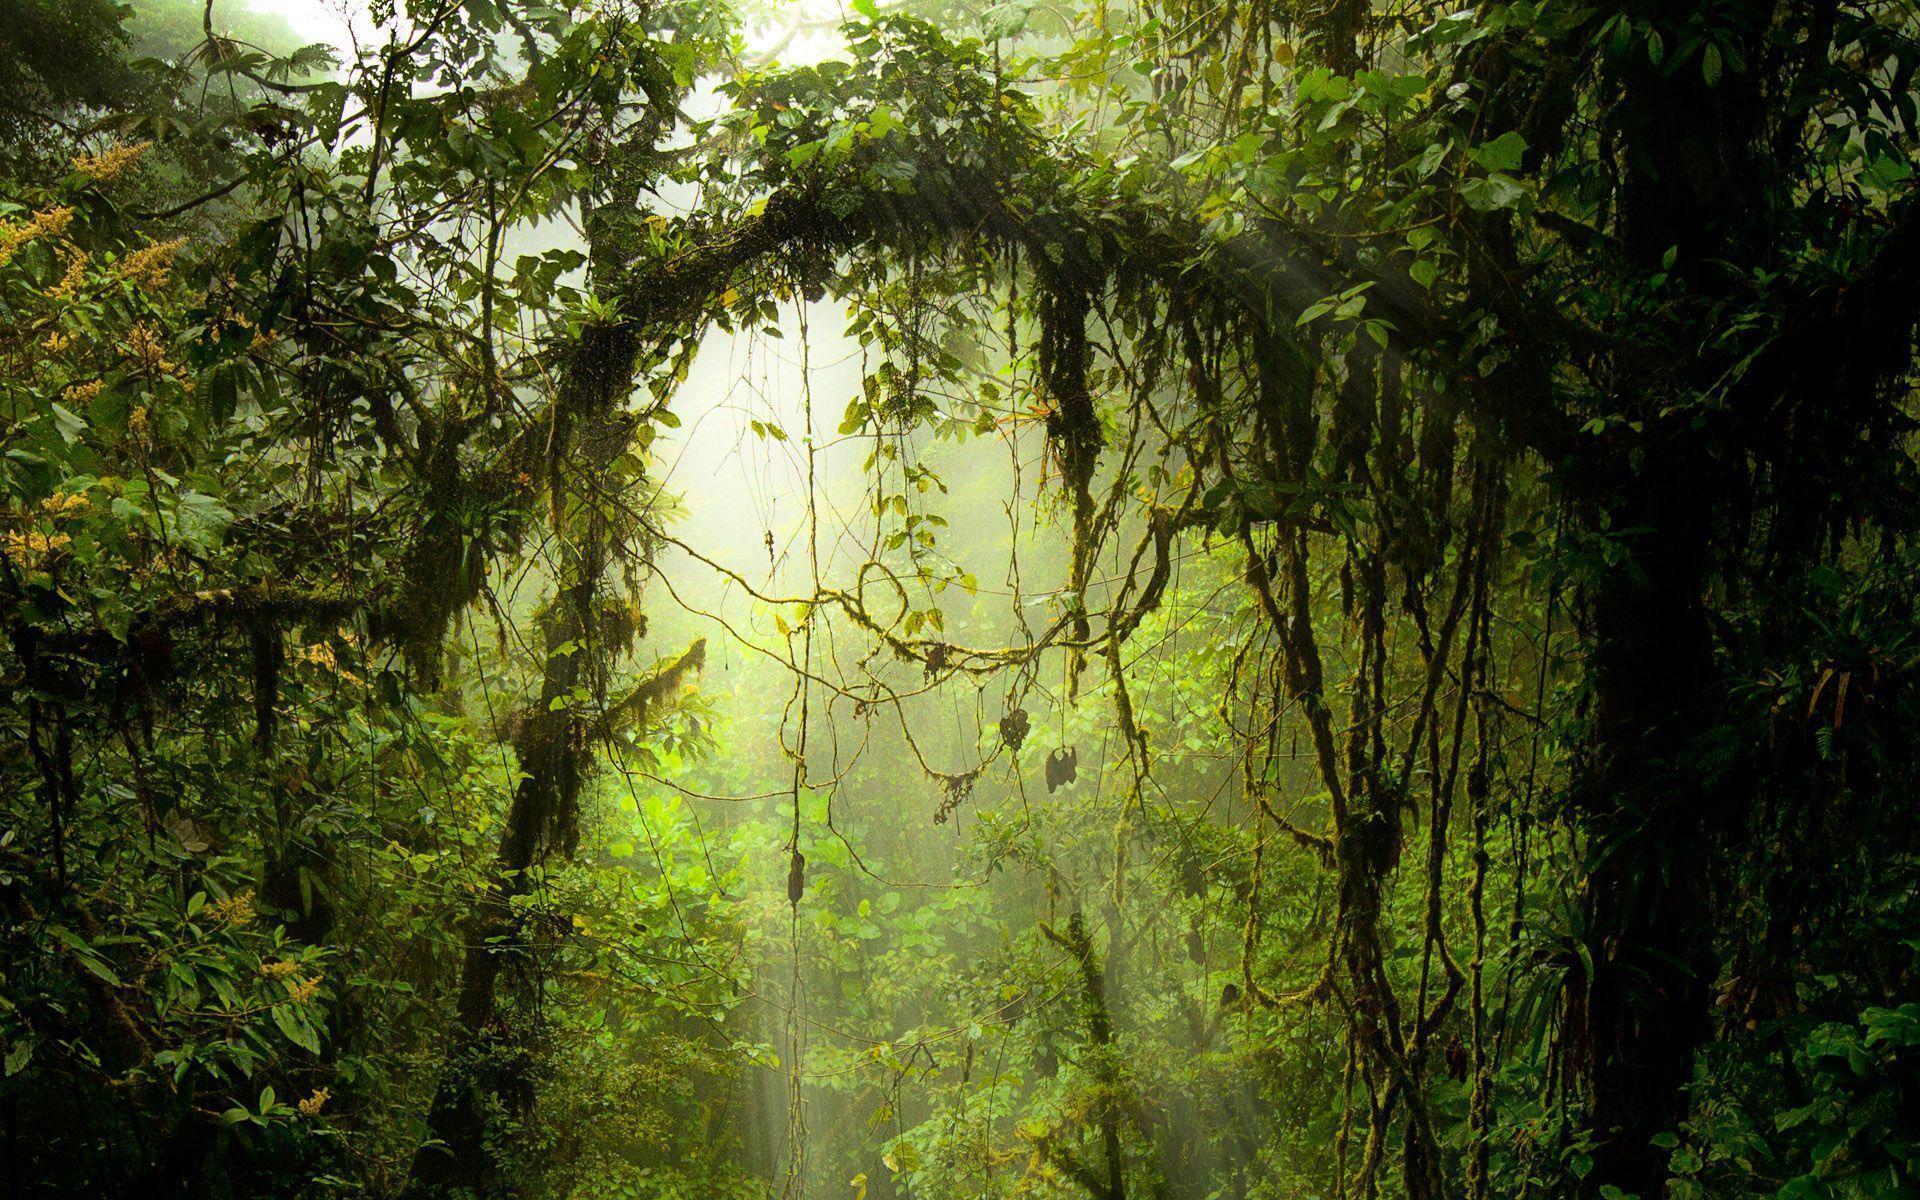 HD Costa Rica Wallpaper and Photo. HD Nature Wallpaper